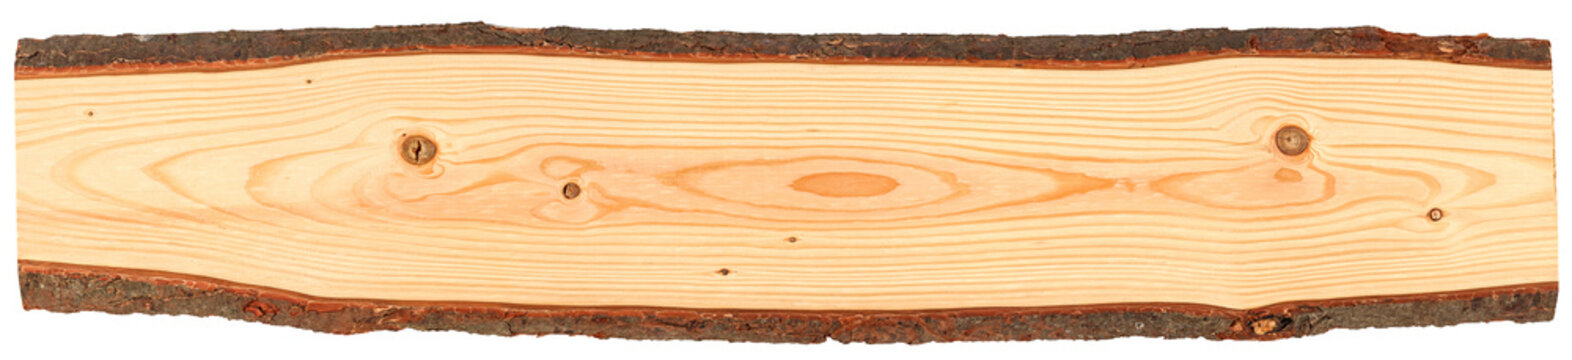 Fototapeta long panorama wood plank with bark isolated on white background